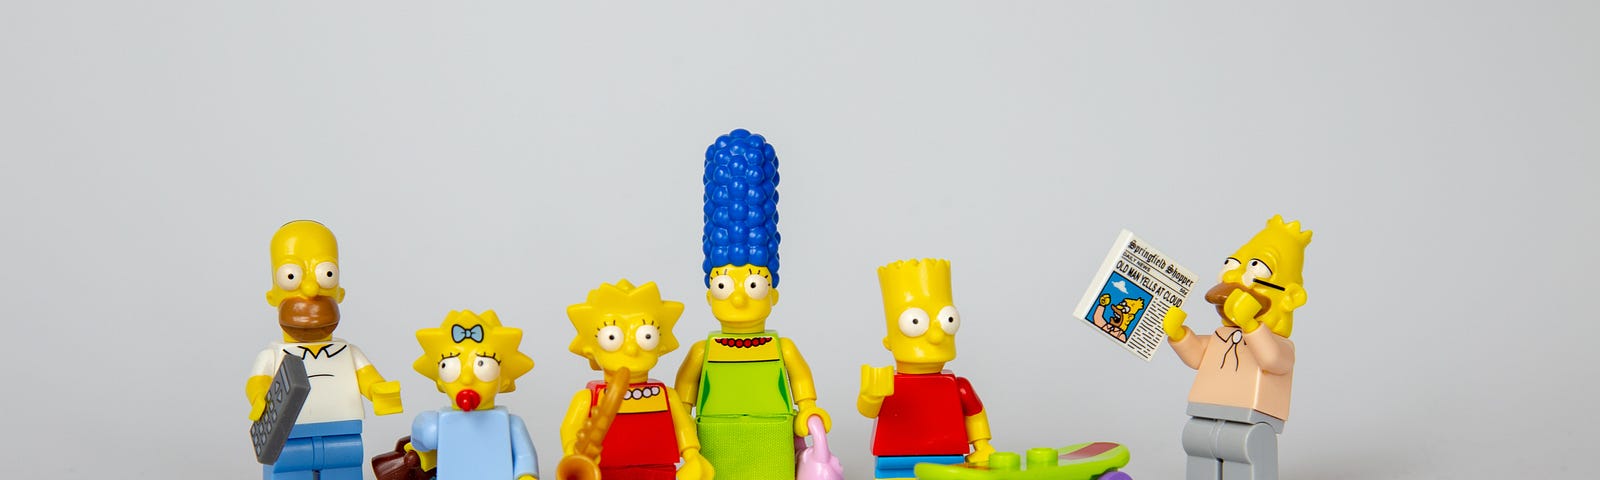 Lego plastic figurines of the cartoon Homer Simpson family